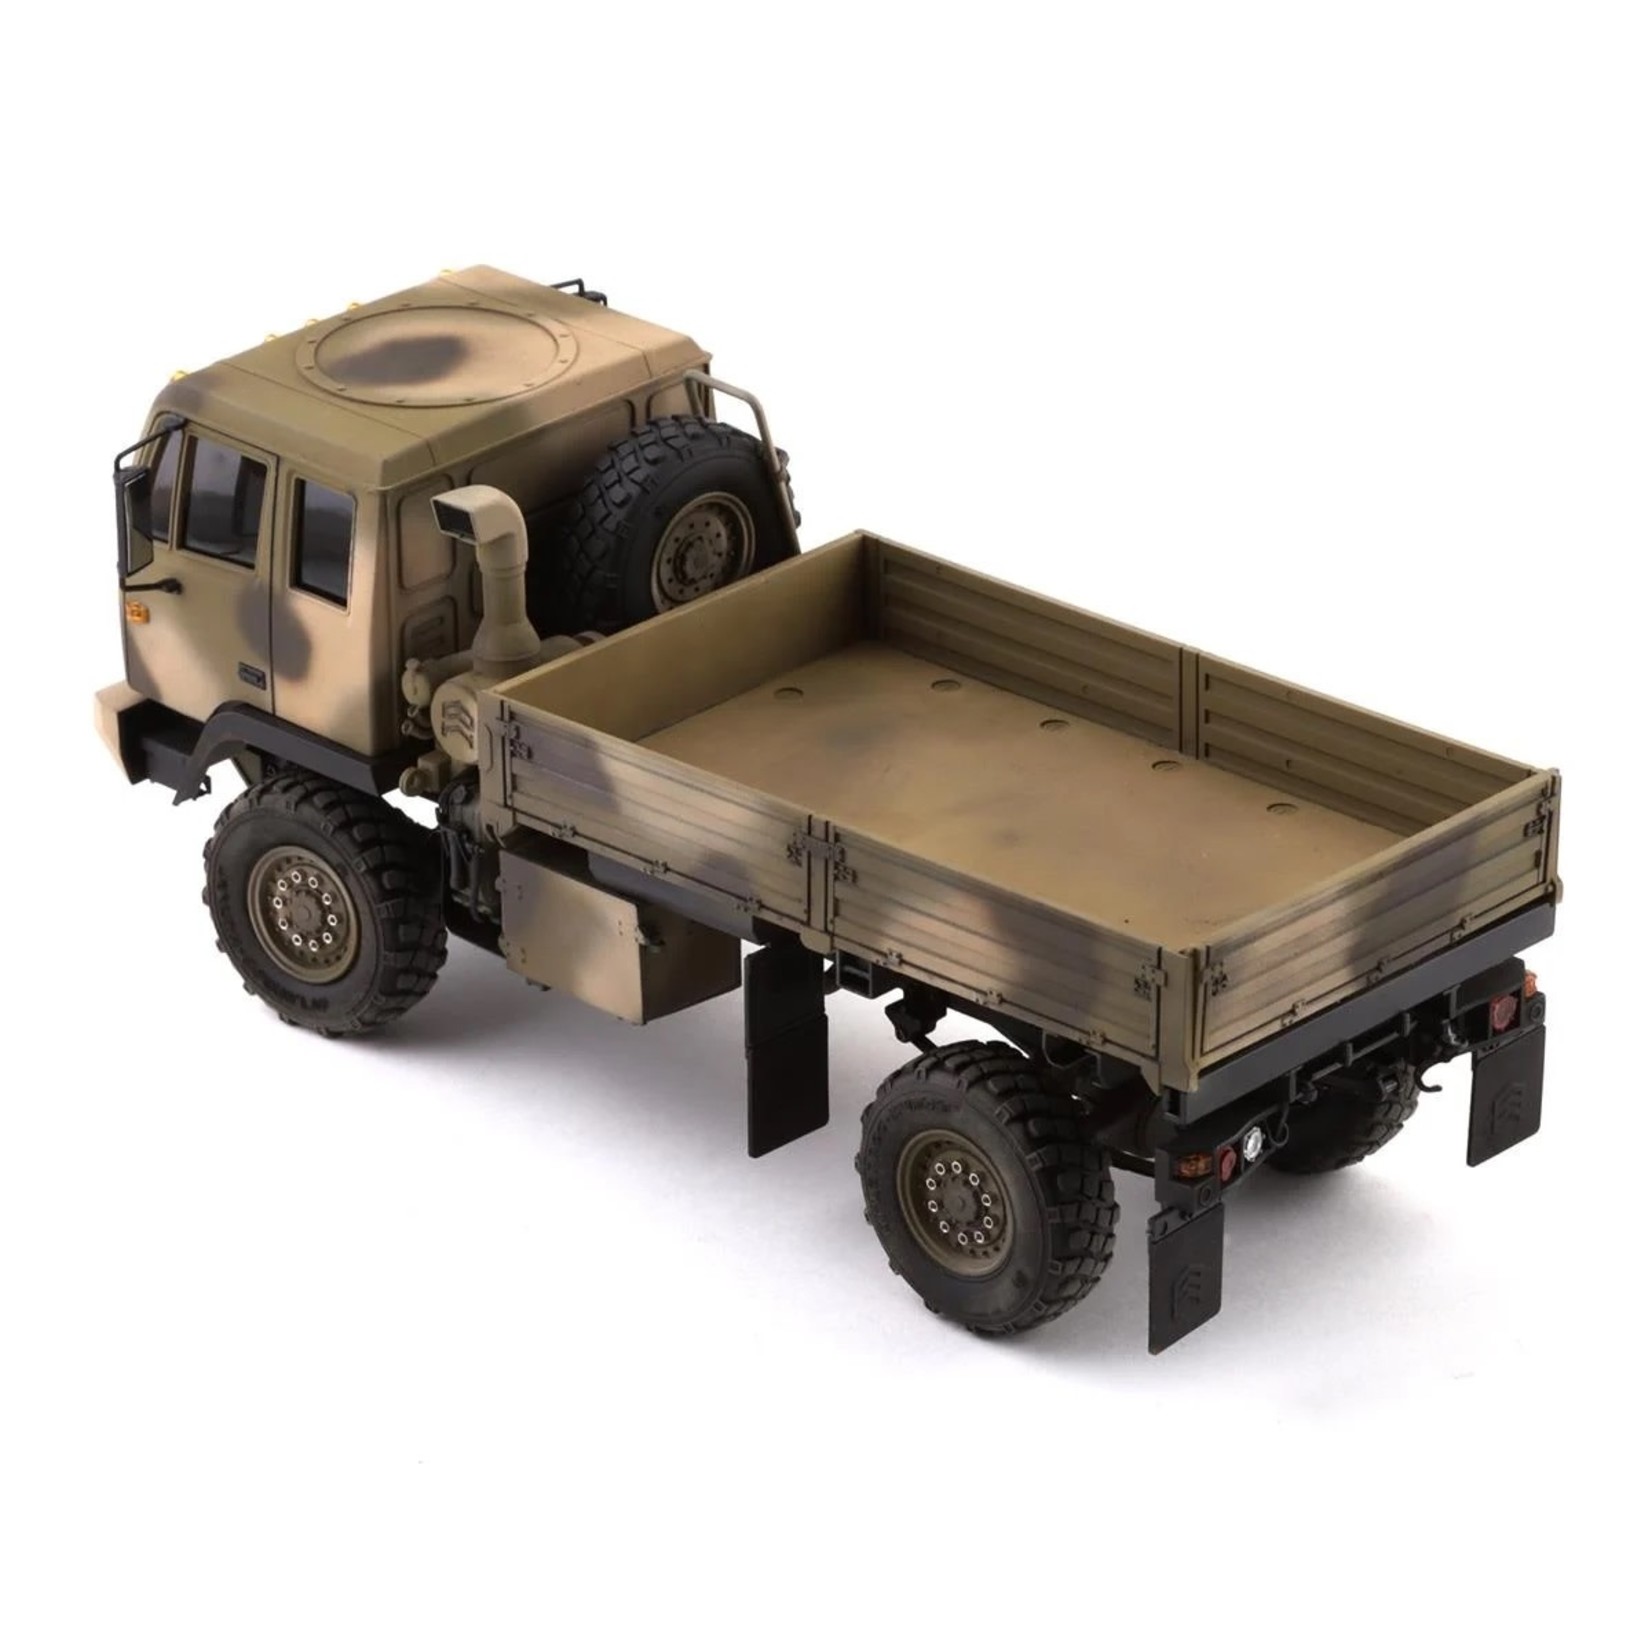 Orlandoo Hunter Orlandoo Hunter 1/32 Micro Scale Military Truck Kit #OH32M01